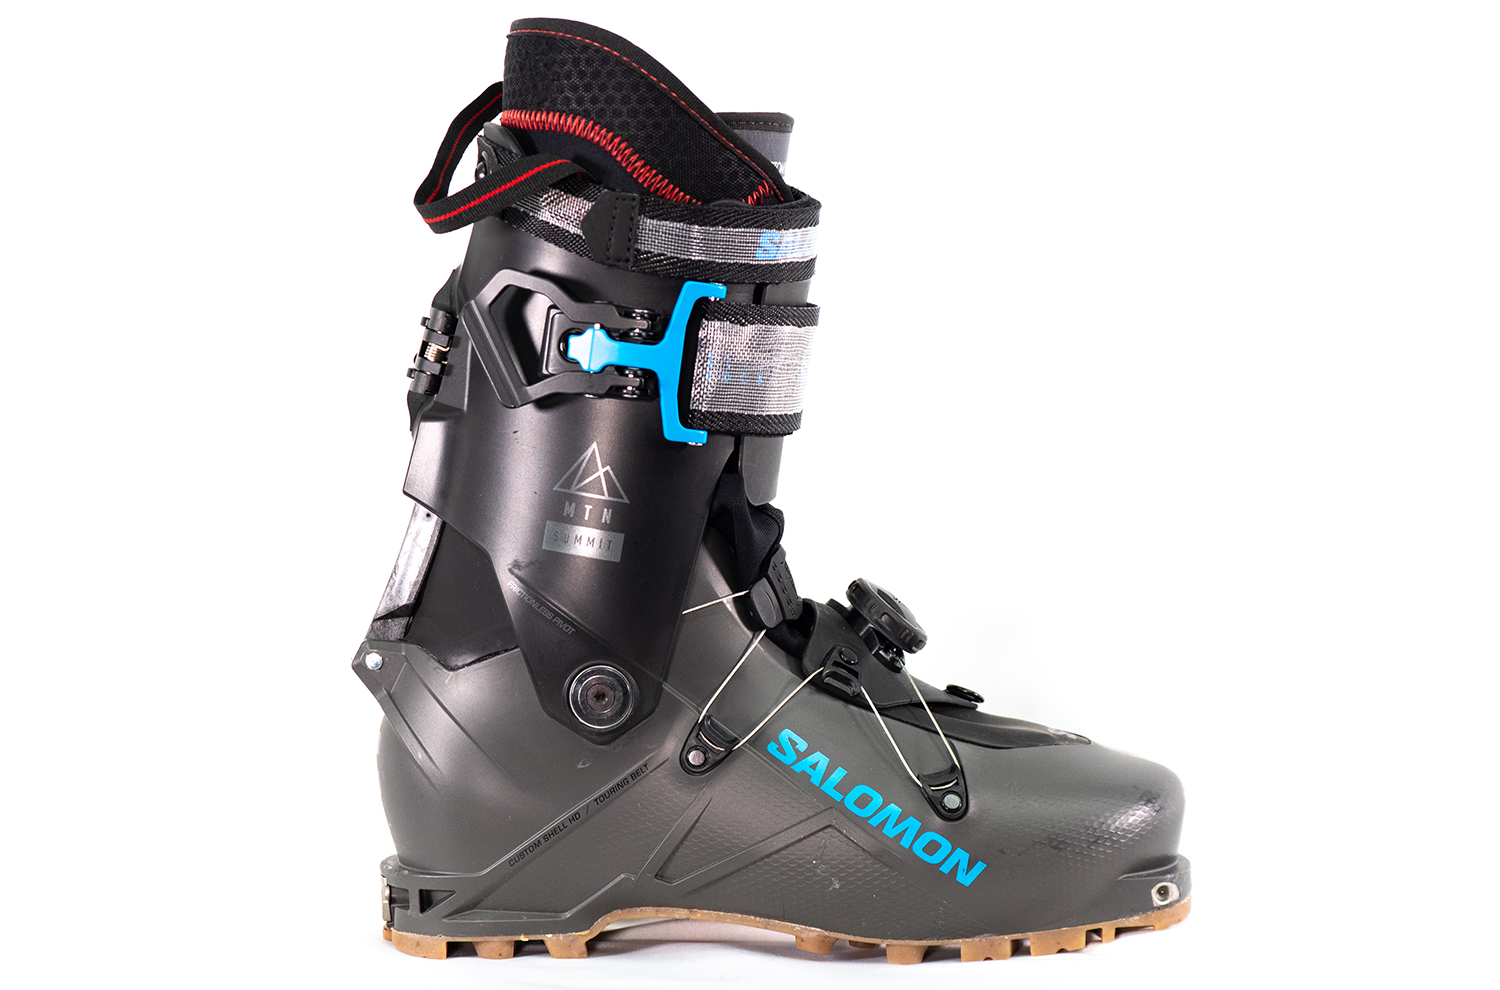 Blister reviews the Salomon S/Lab MTN Summit ski boot